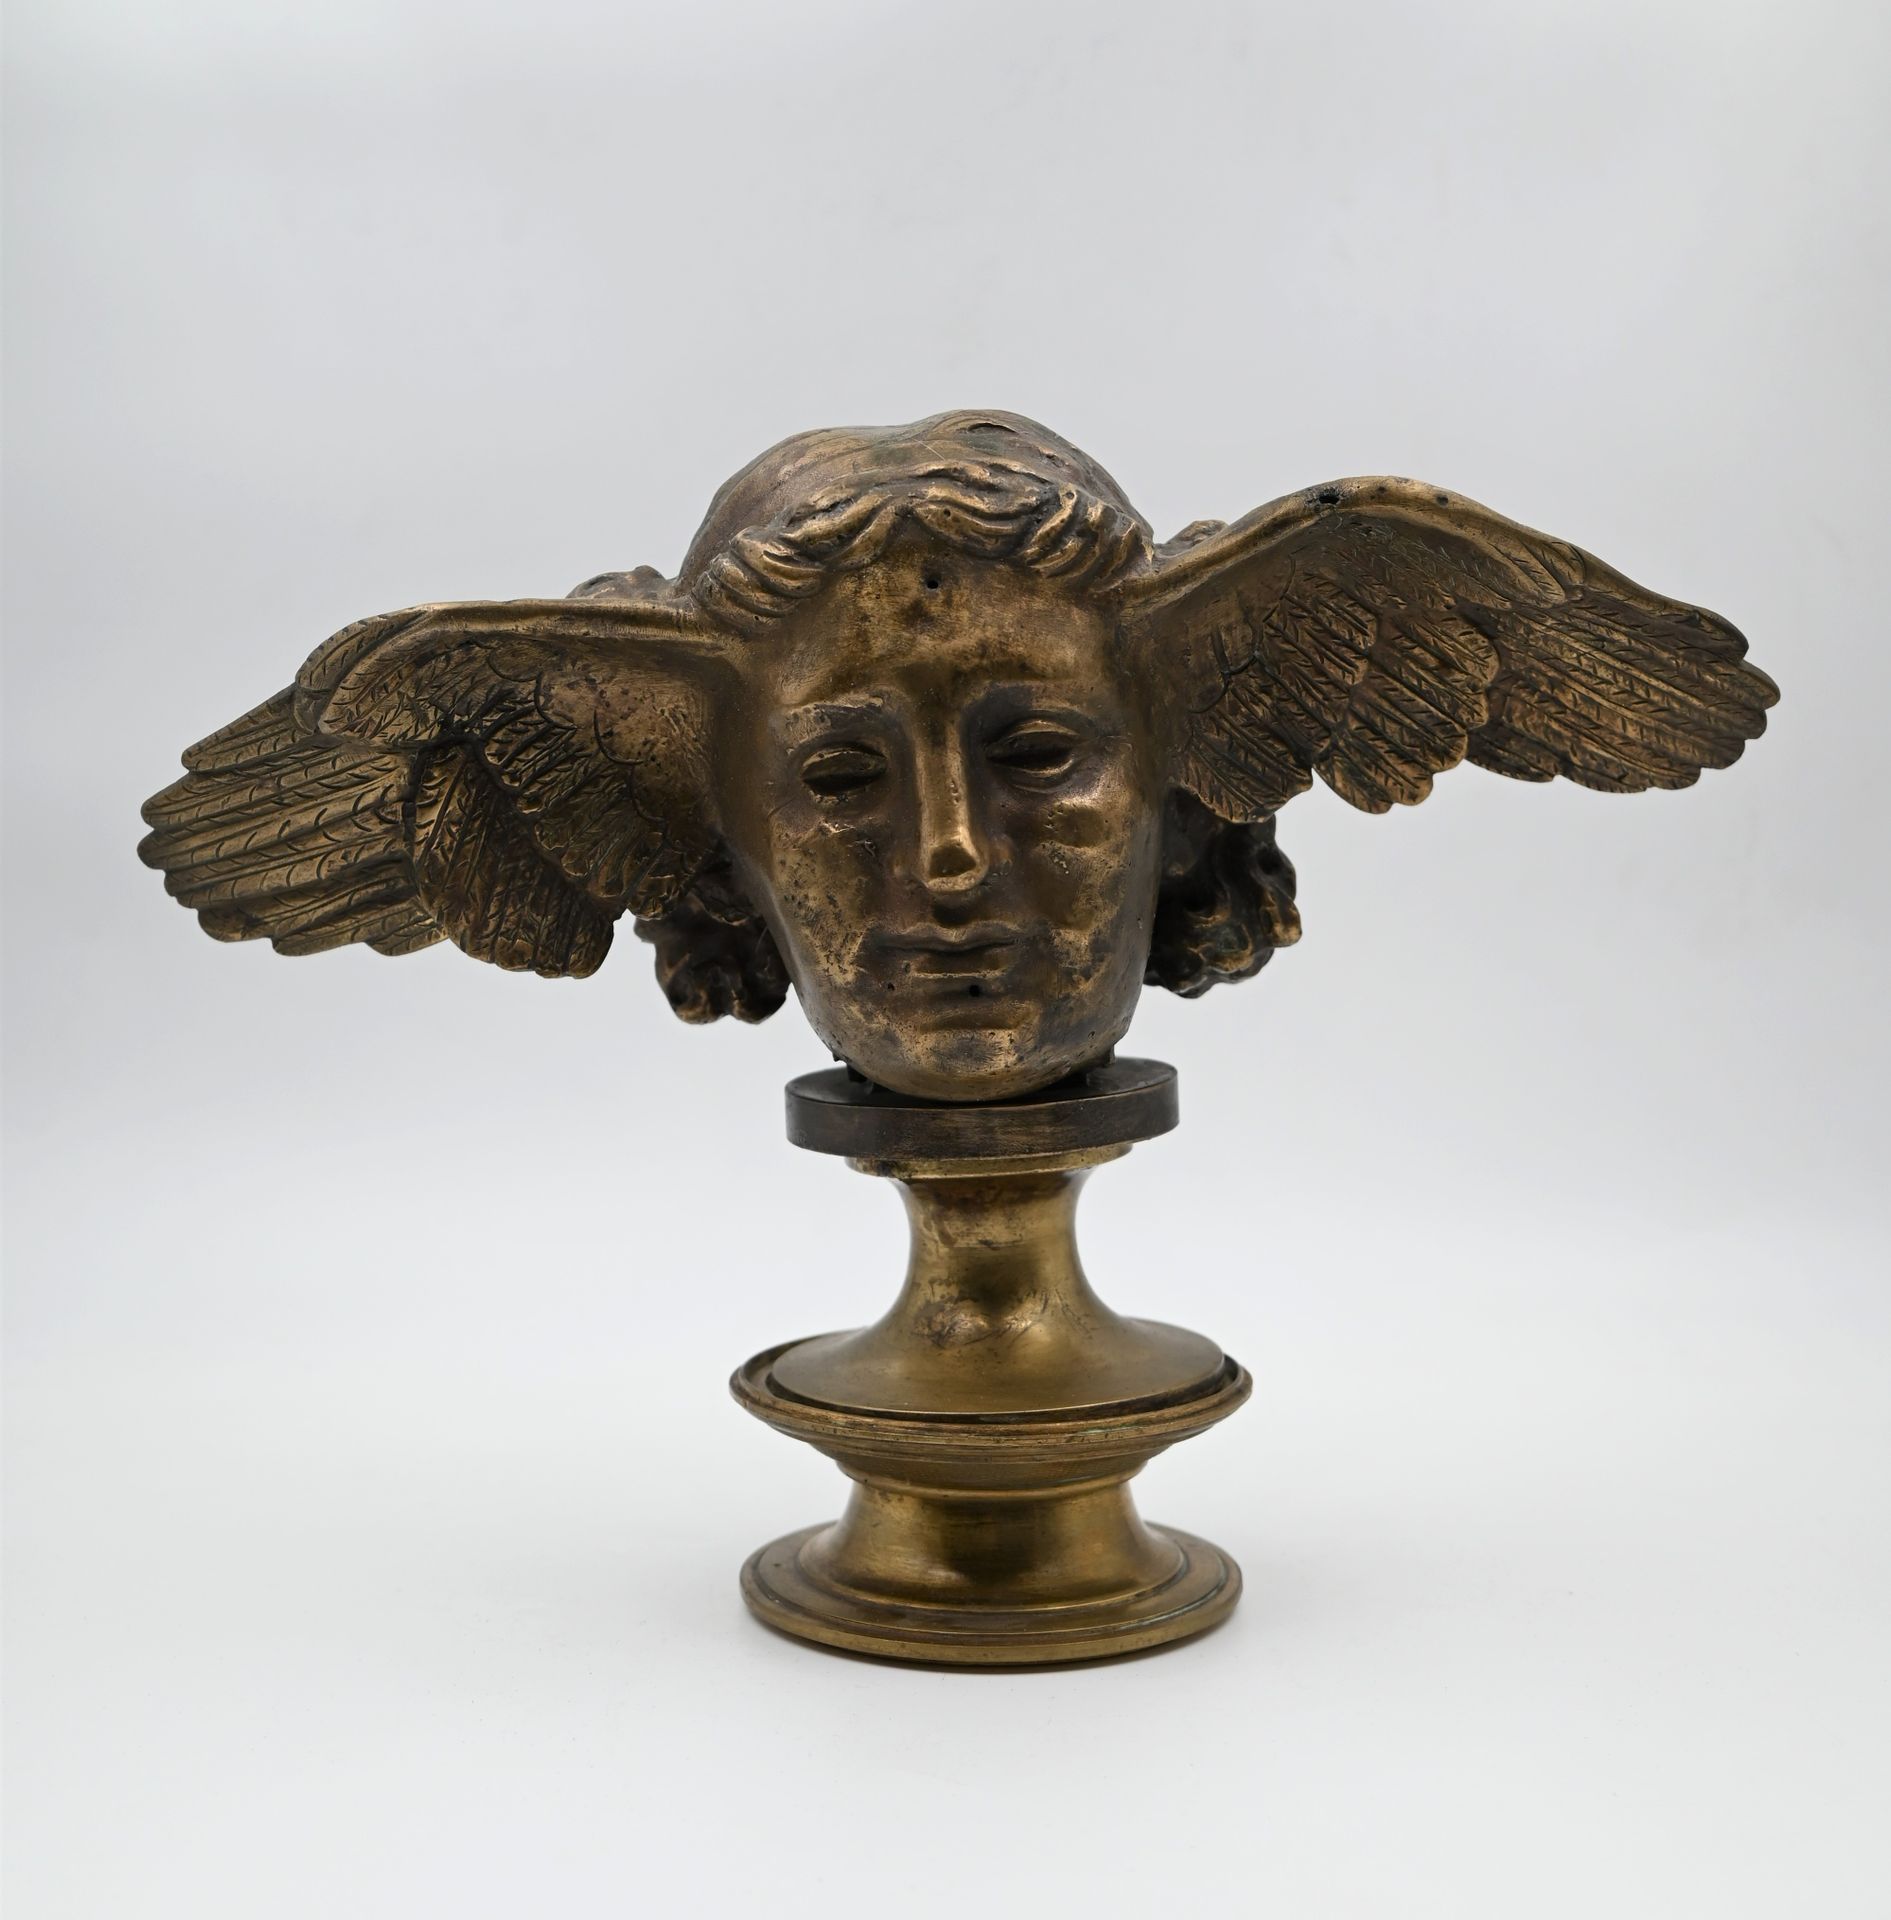 Null 鎏金铜质的希普诺斯头像，在一个翻转的底座上，有两个立面。从大英博物馆的青铜雕塑上修复而成。高22厘米